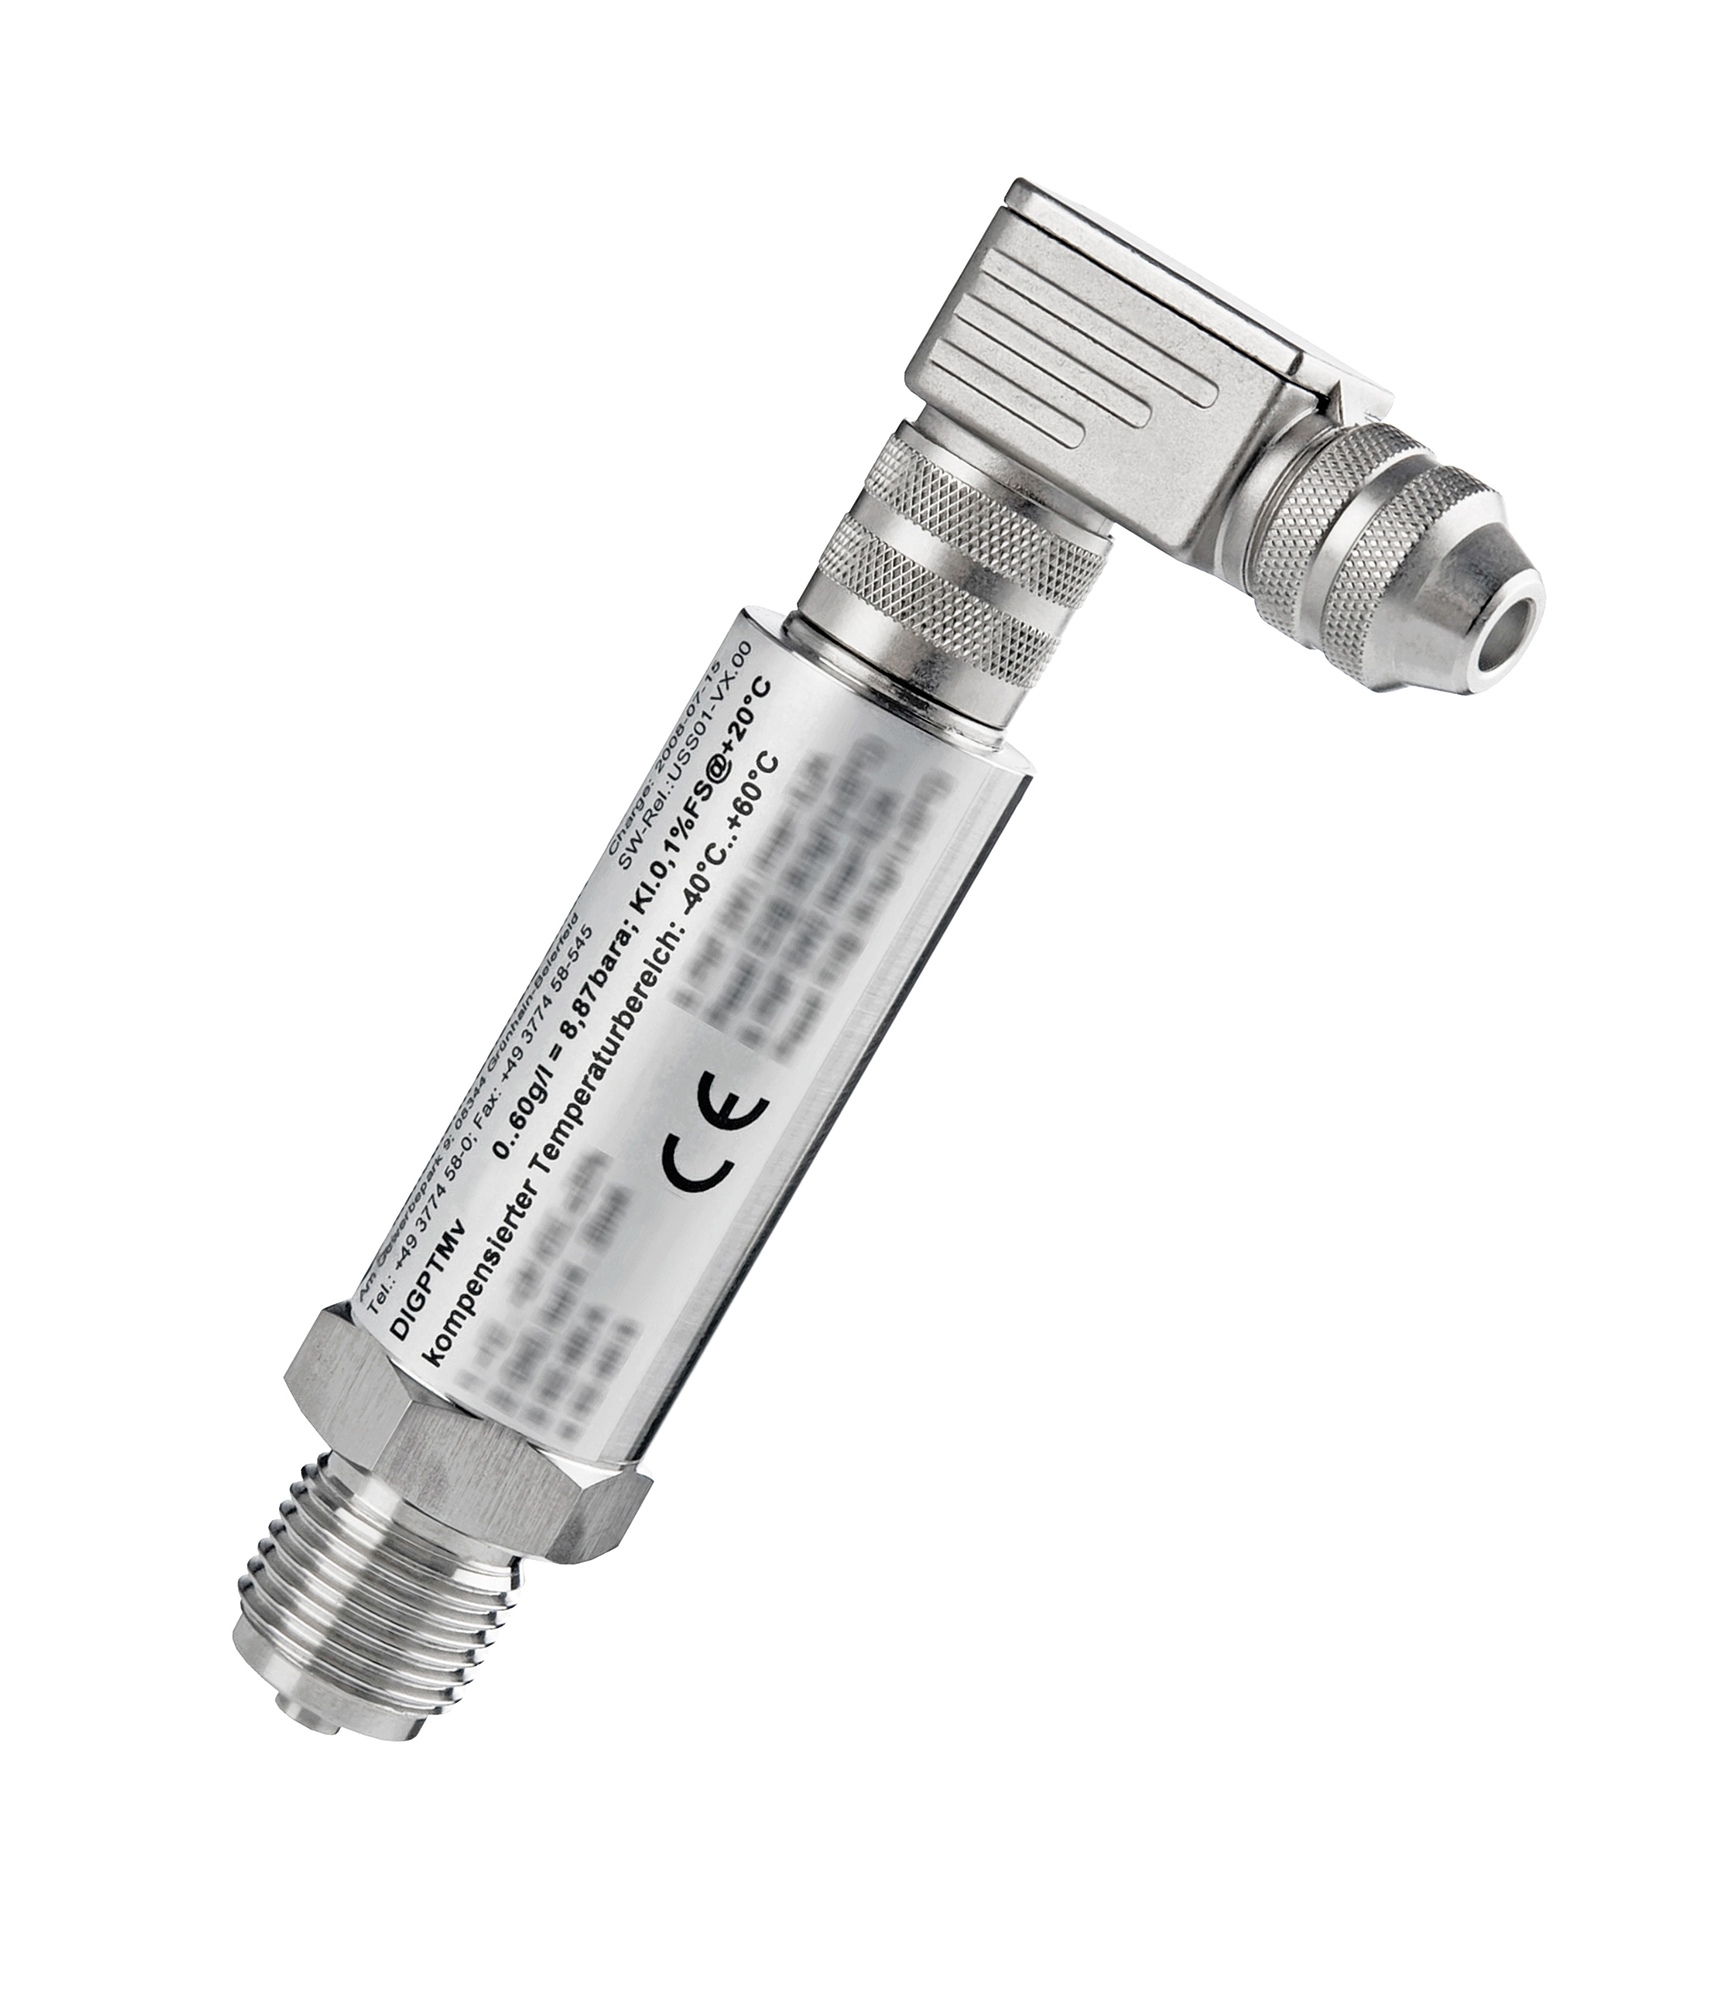 Armaturenbau Manotherm – Pressure Gauges, Thermometers, Pressure Metrology with Precision - DIGPTMv